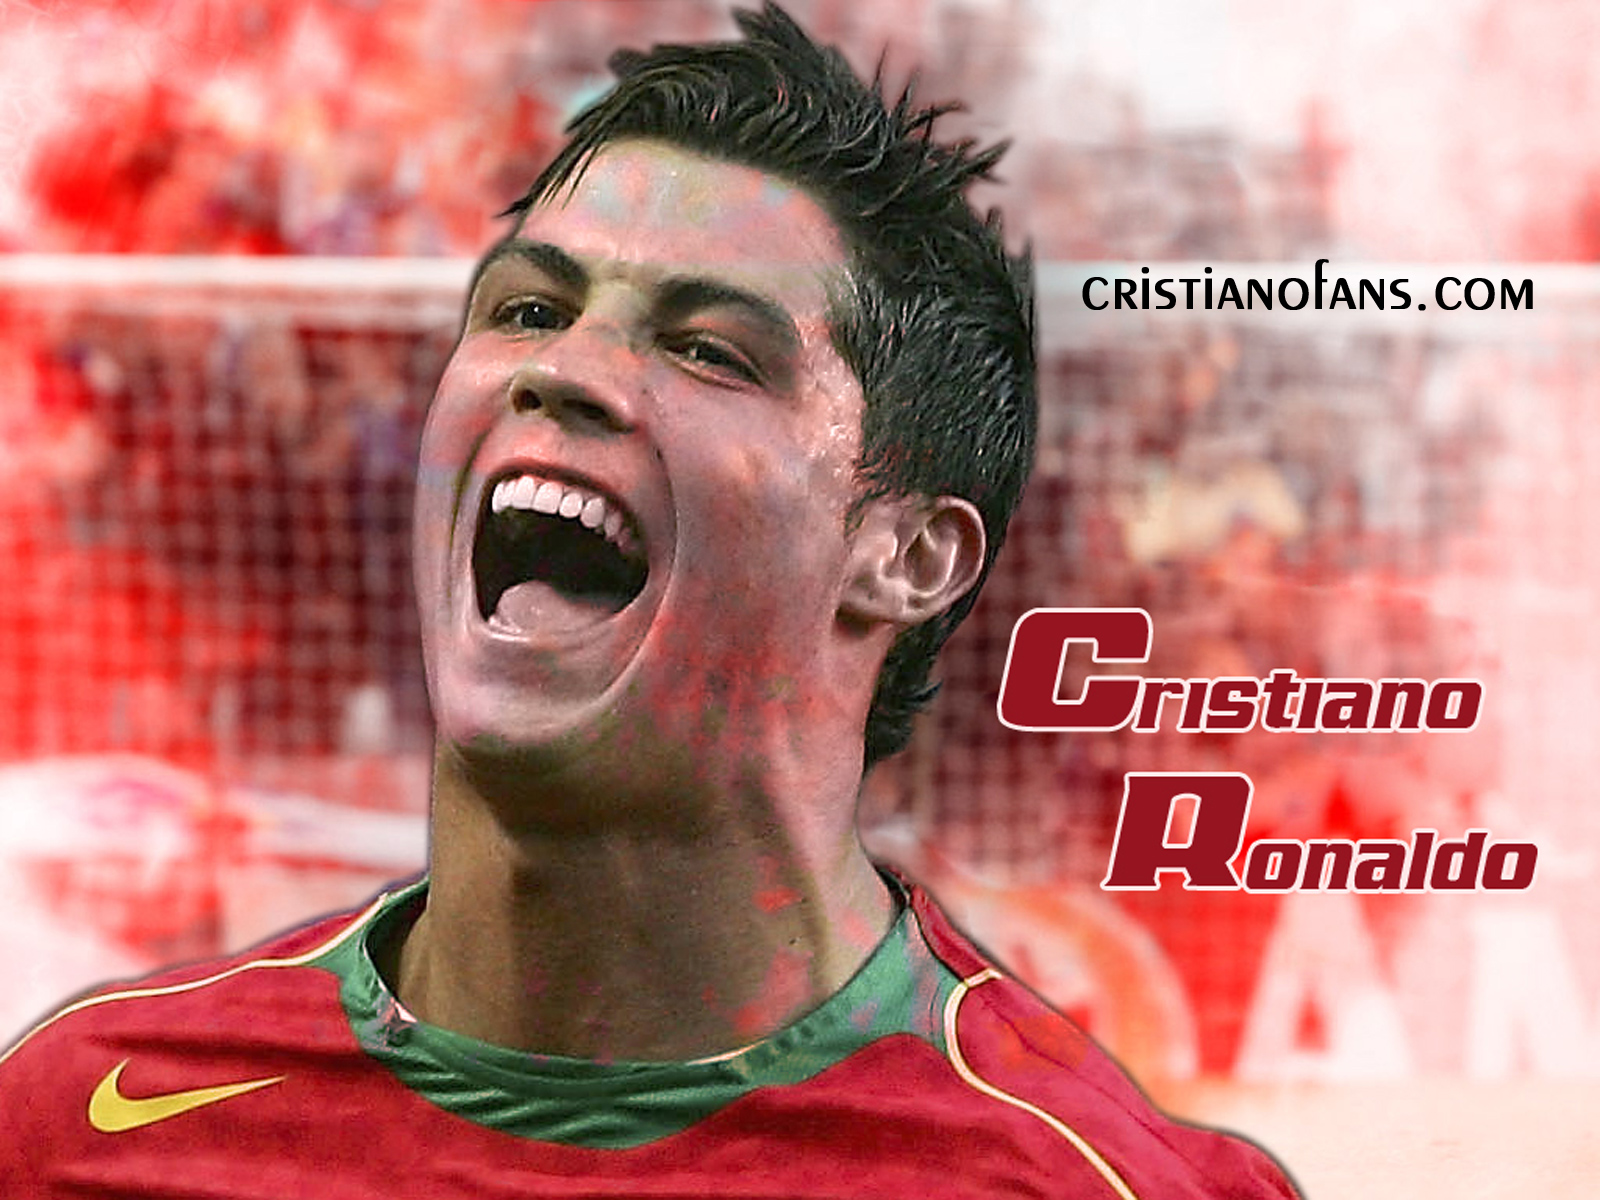 http://3.bp.blogspot.com/-lmAiPz_3MWE/Td2pUeq1P5I/AAAAAAAAAPg/Uli6LkQcwdo/s1600/Cristiano-Ronaldo-Hot-Wallpapers-3.jpg